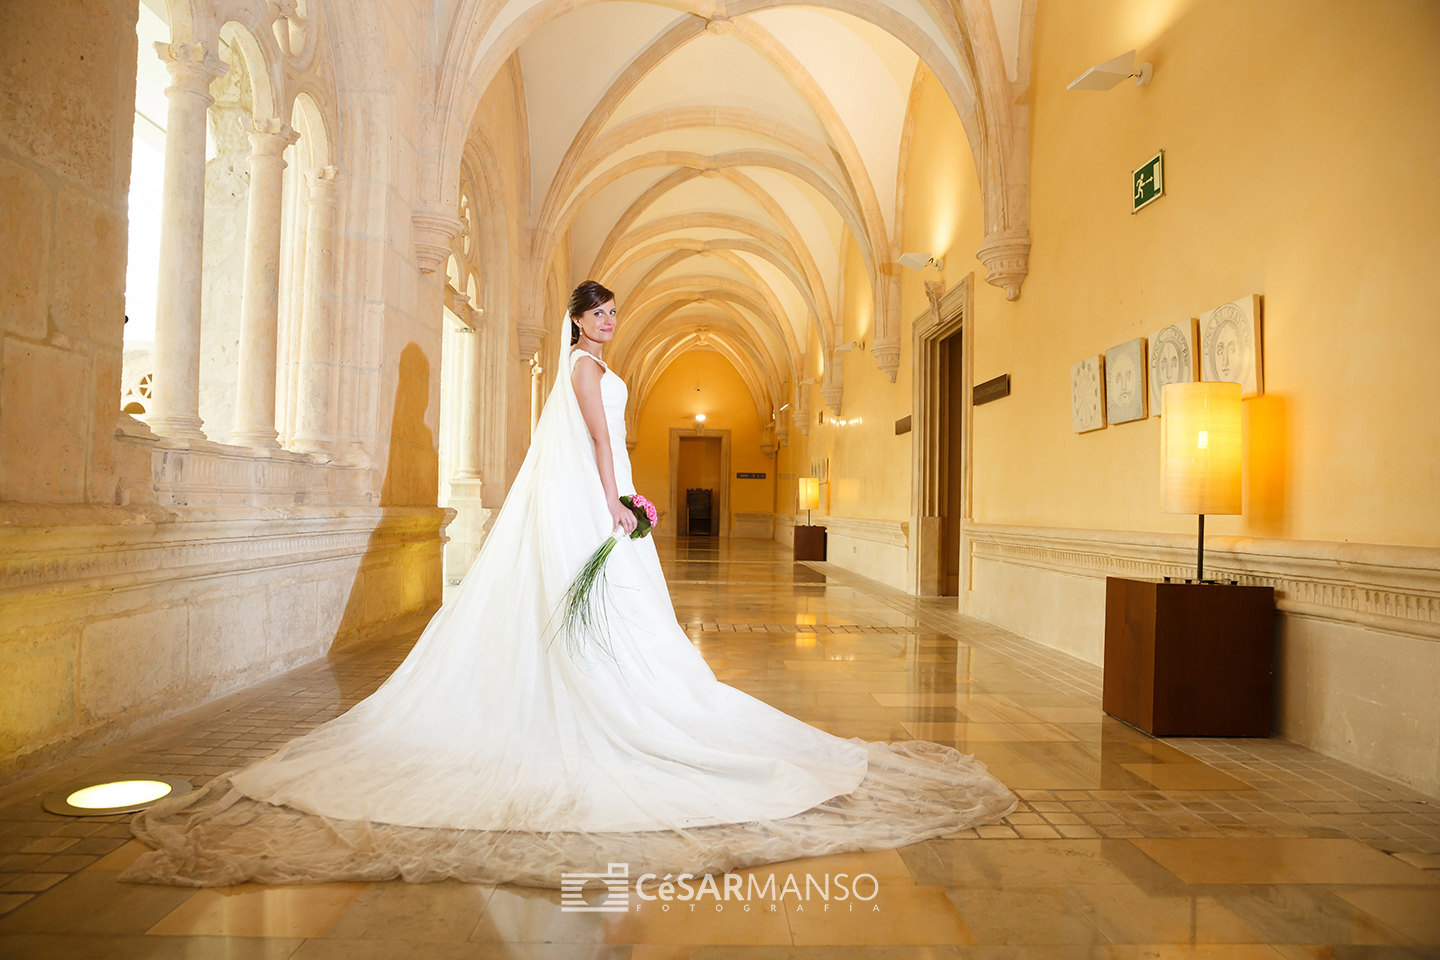 César Manso Fotógrafo: Fotógrafos de boda en Burgos - Boda%20AlejandrayJairo-44.JPG